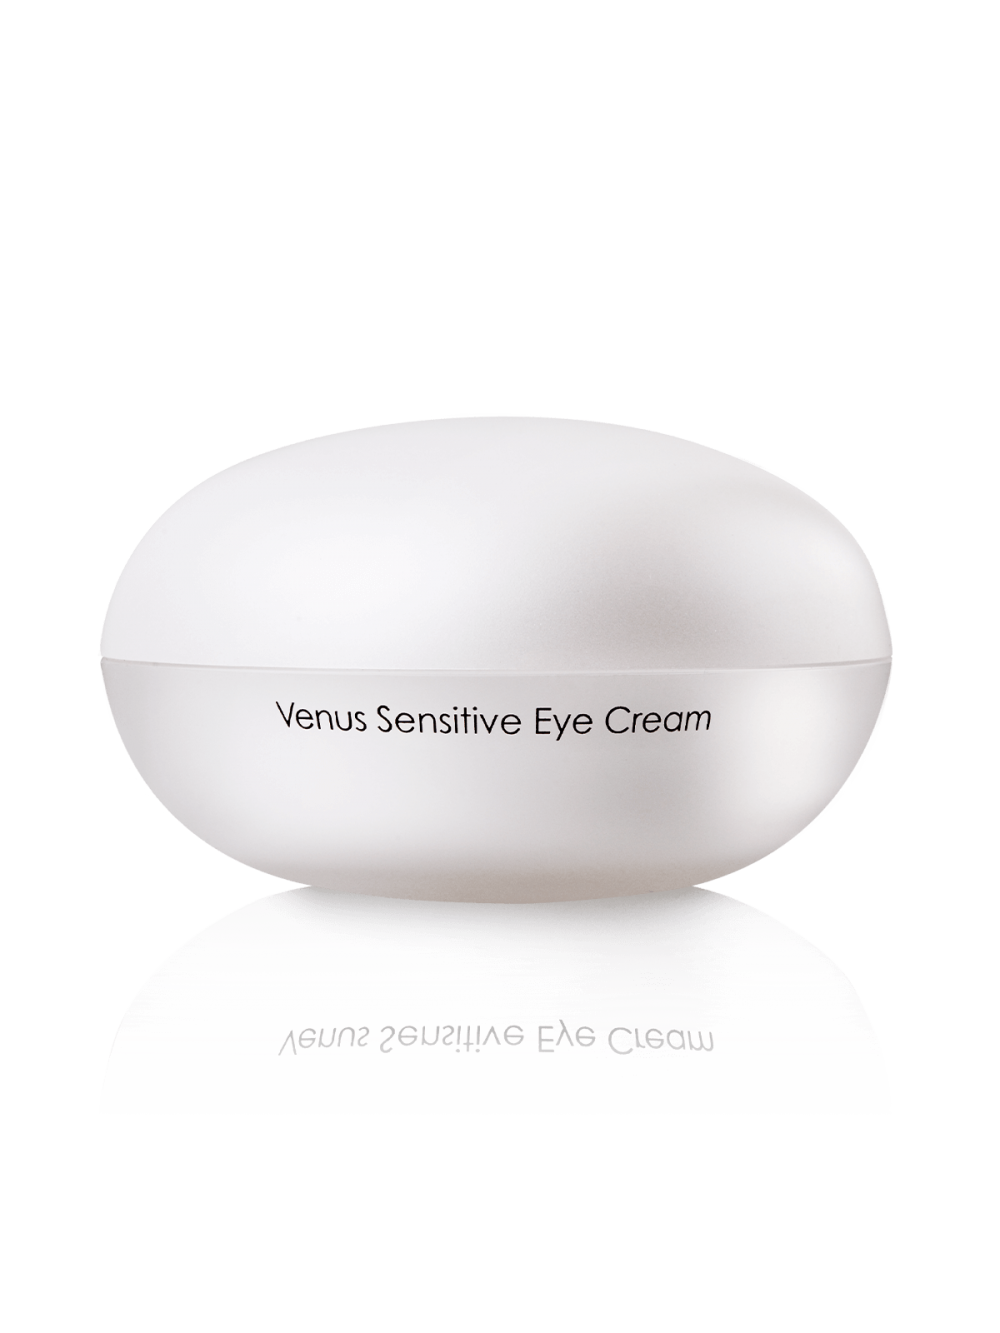 Venus Sensitive Eye Cream back